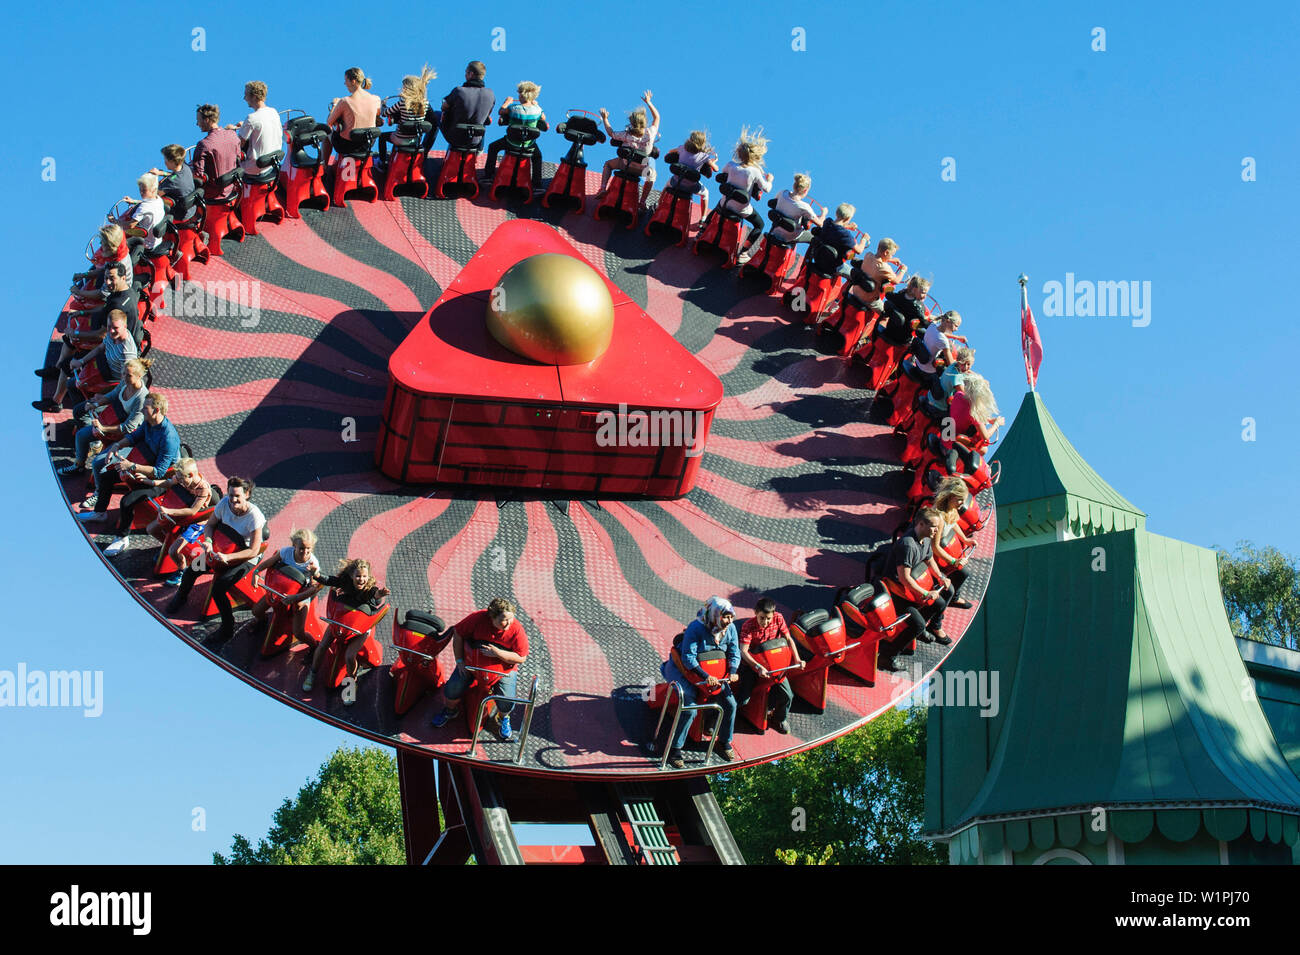 Liseberg amusement park with huge turntable, Sweden Stock Photo